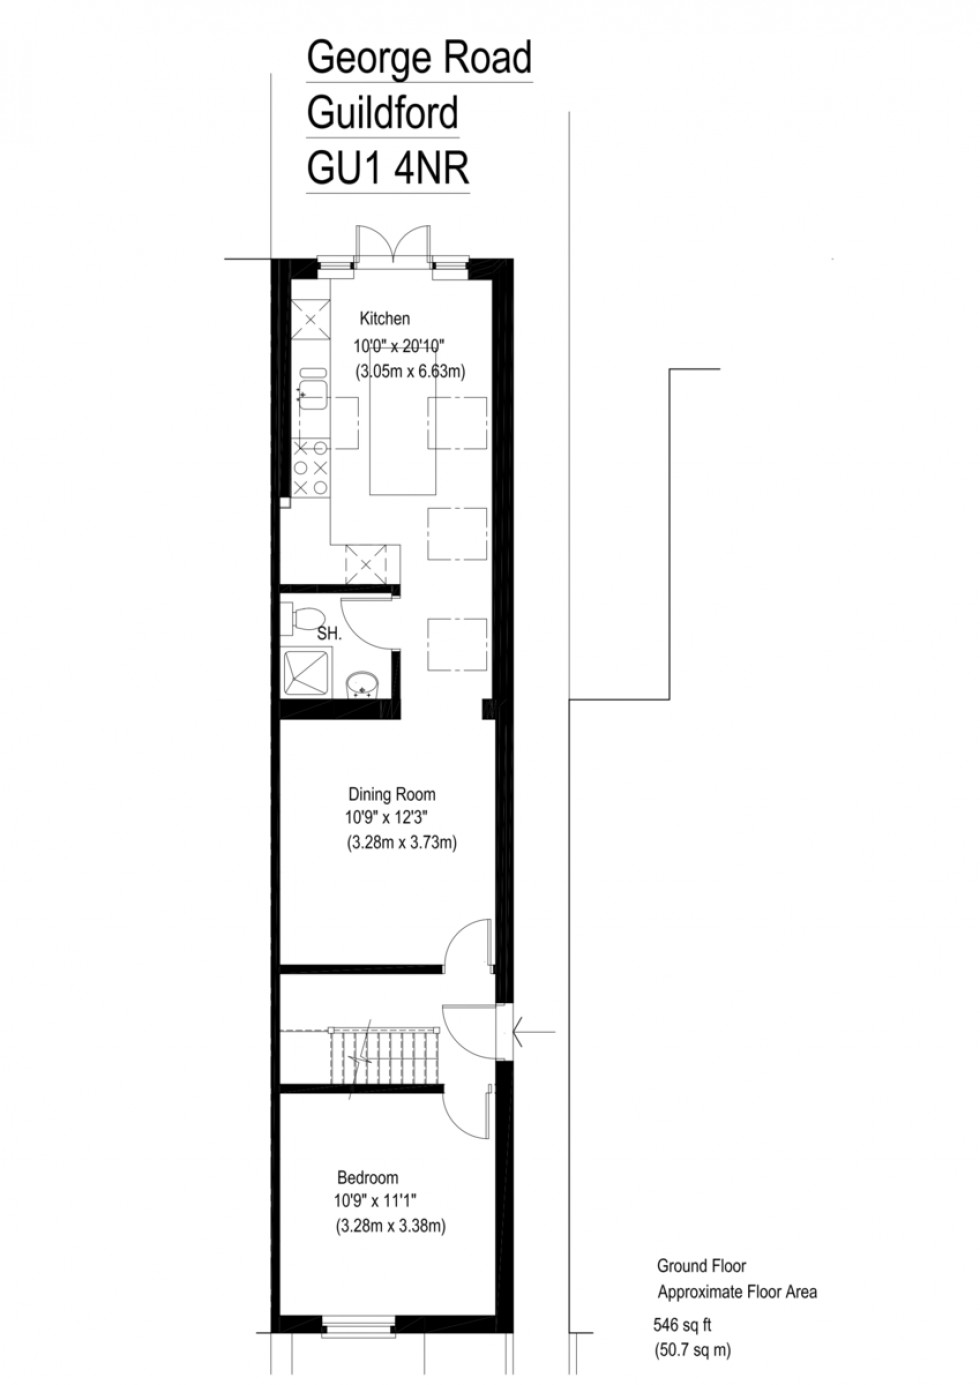 Floorplan for George Road, Guildford